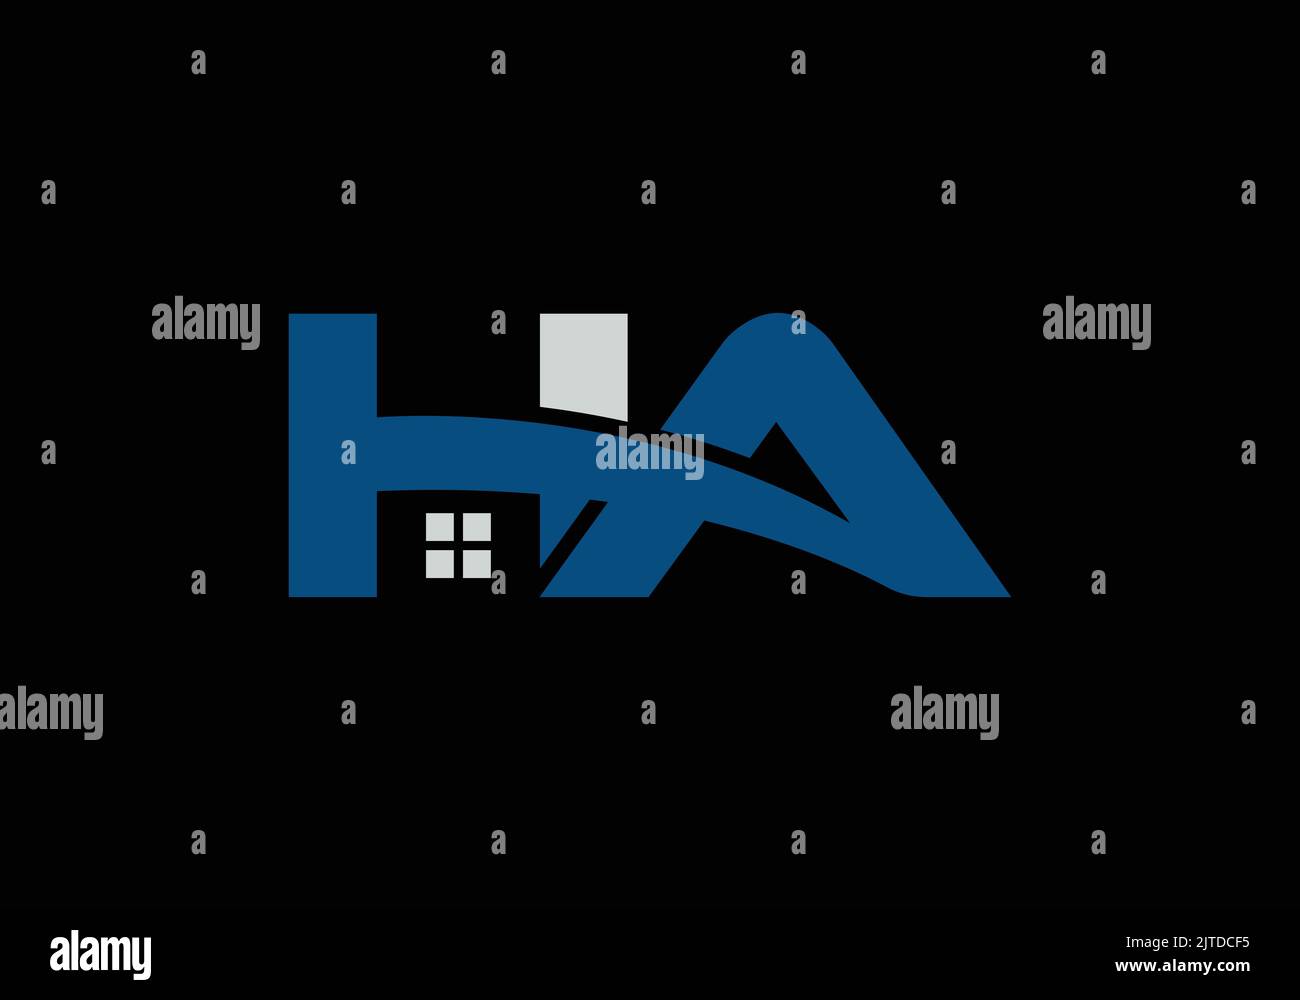 HA Initial Monogram Letter ha Real Estate Logo Design Vector Template h a Letter Logo Design Stock Vector